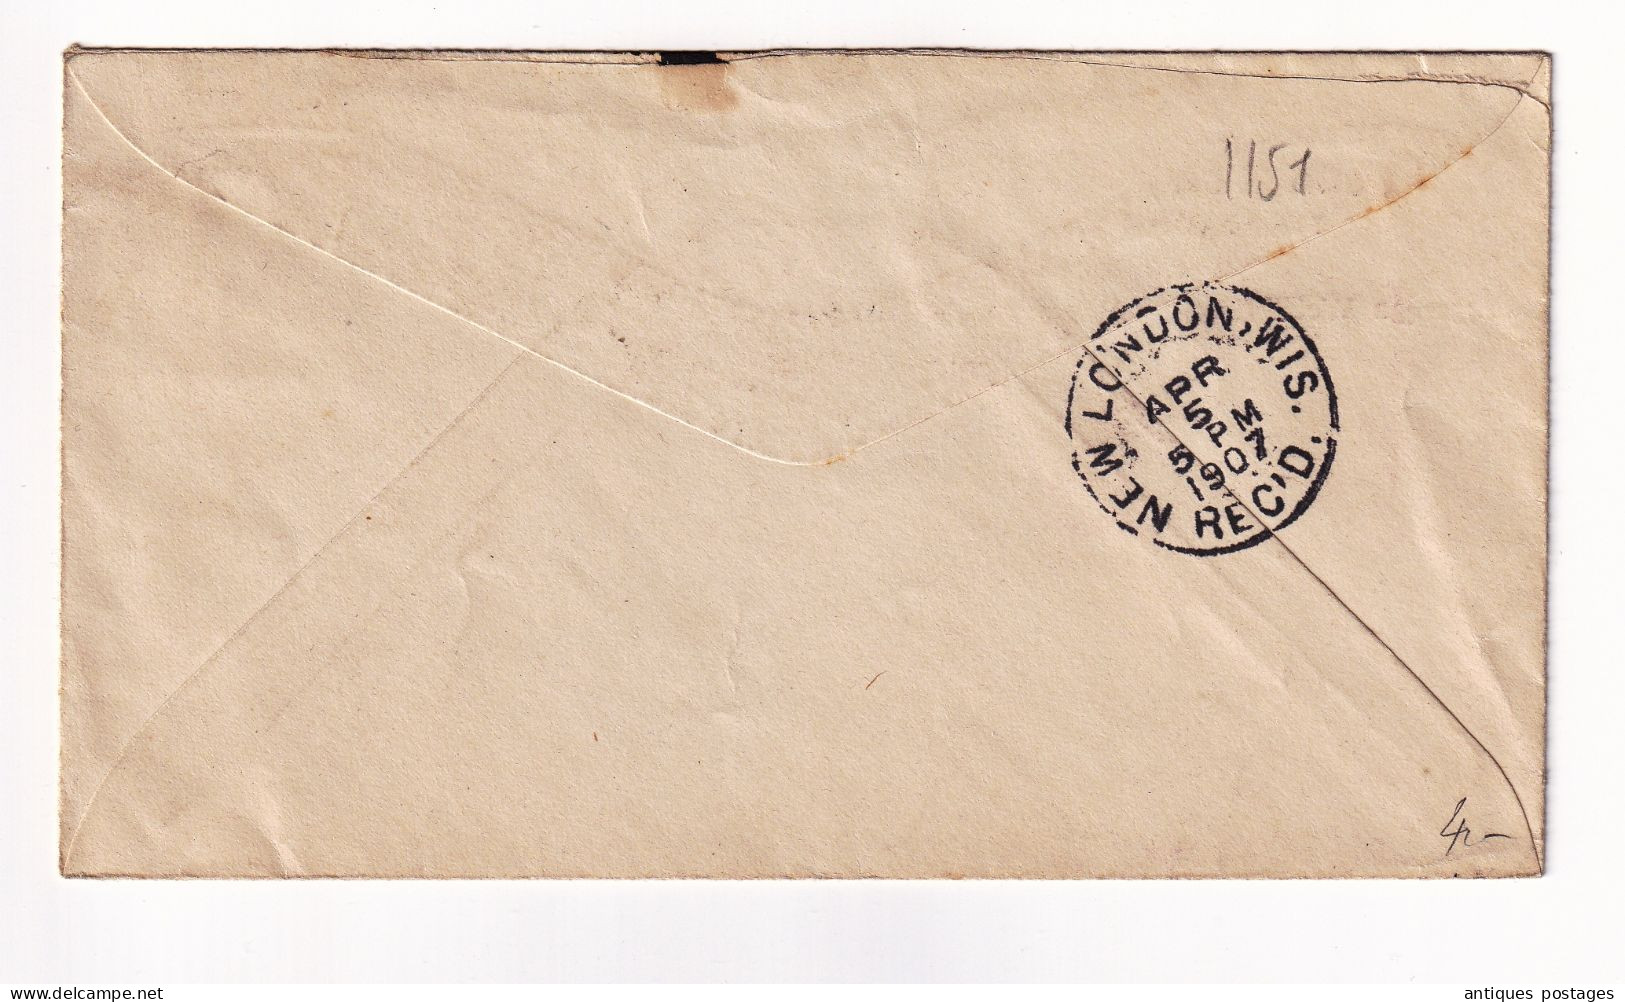 Postal Stationery Crandon Wisconsin USA The Page Landeck Lumber Co. 1907 Two Cents George Washington New London - 1901-20